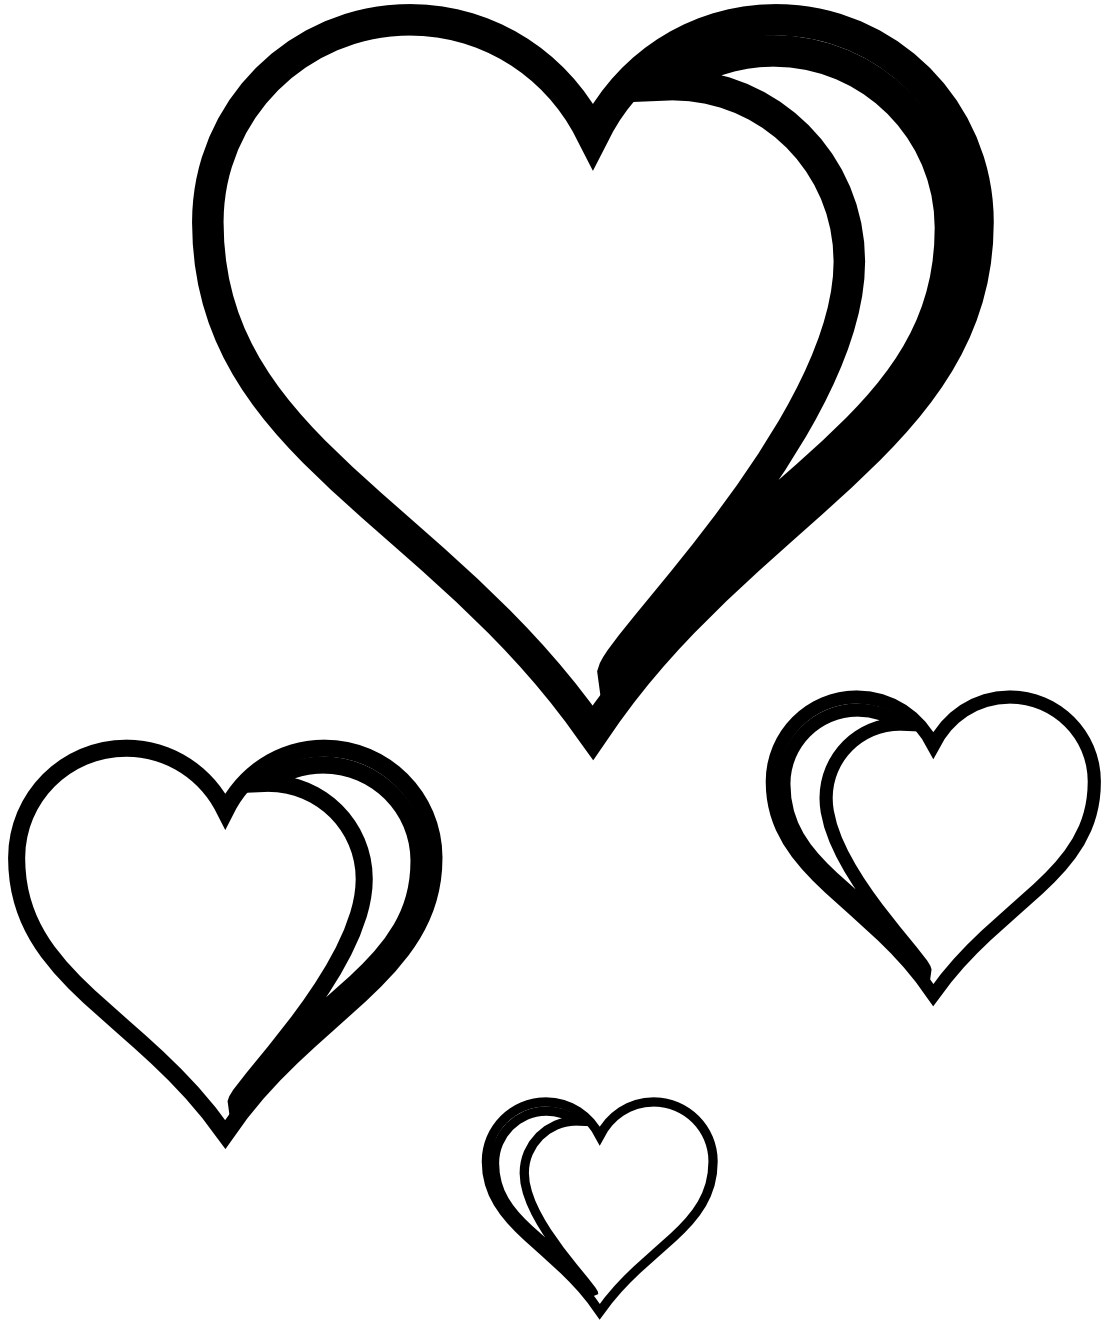 Love symbols clipart black and white